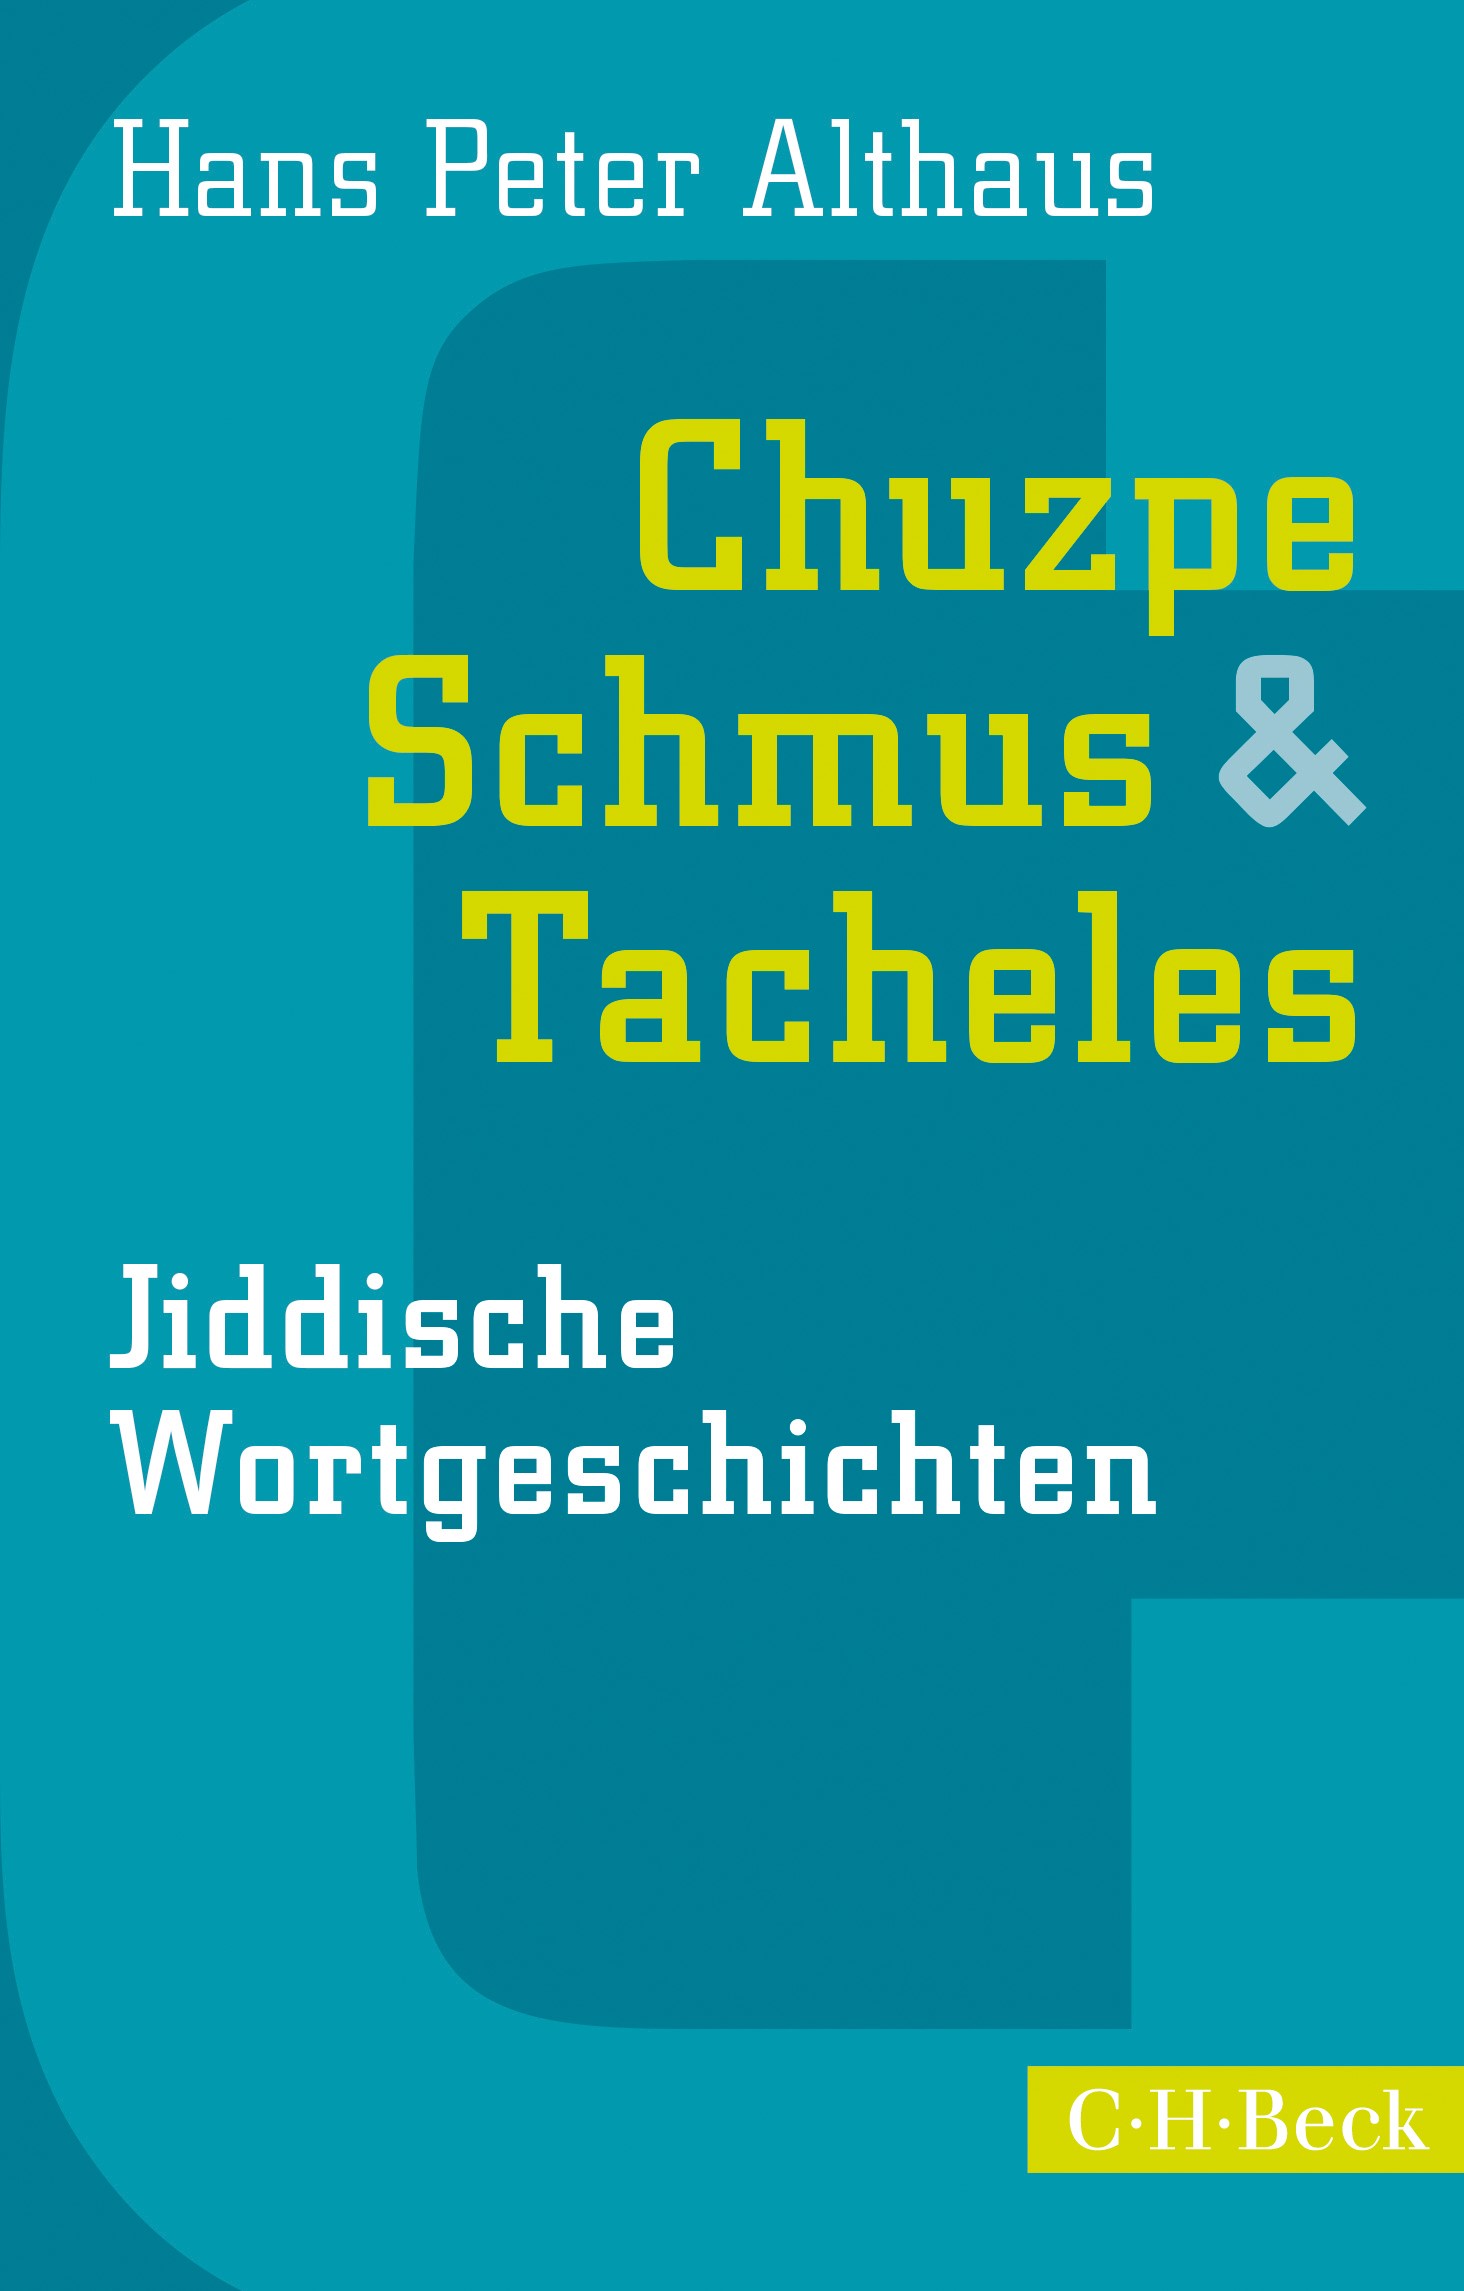 Cover: Althaus, Hans Peter, Chuzpe, Schmus & Tacheles